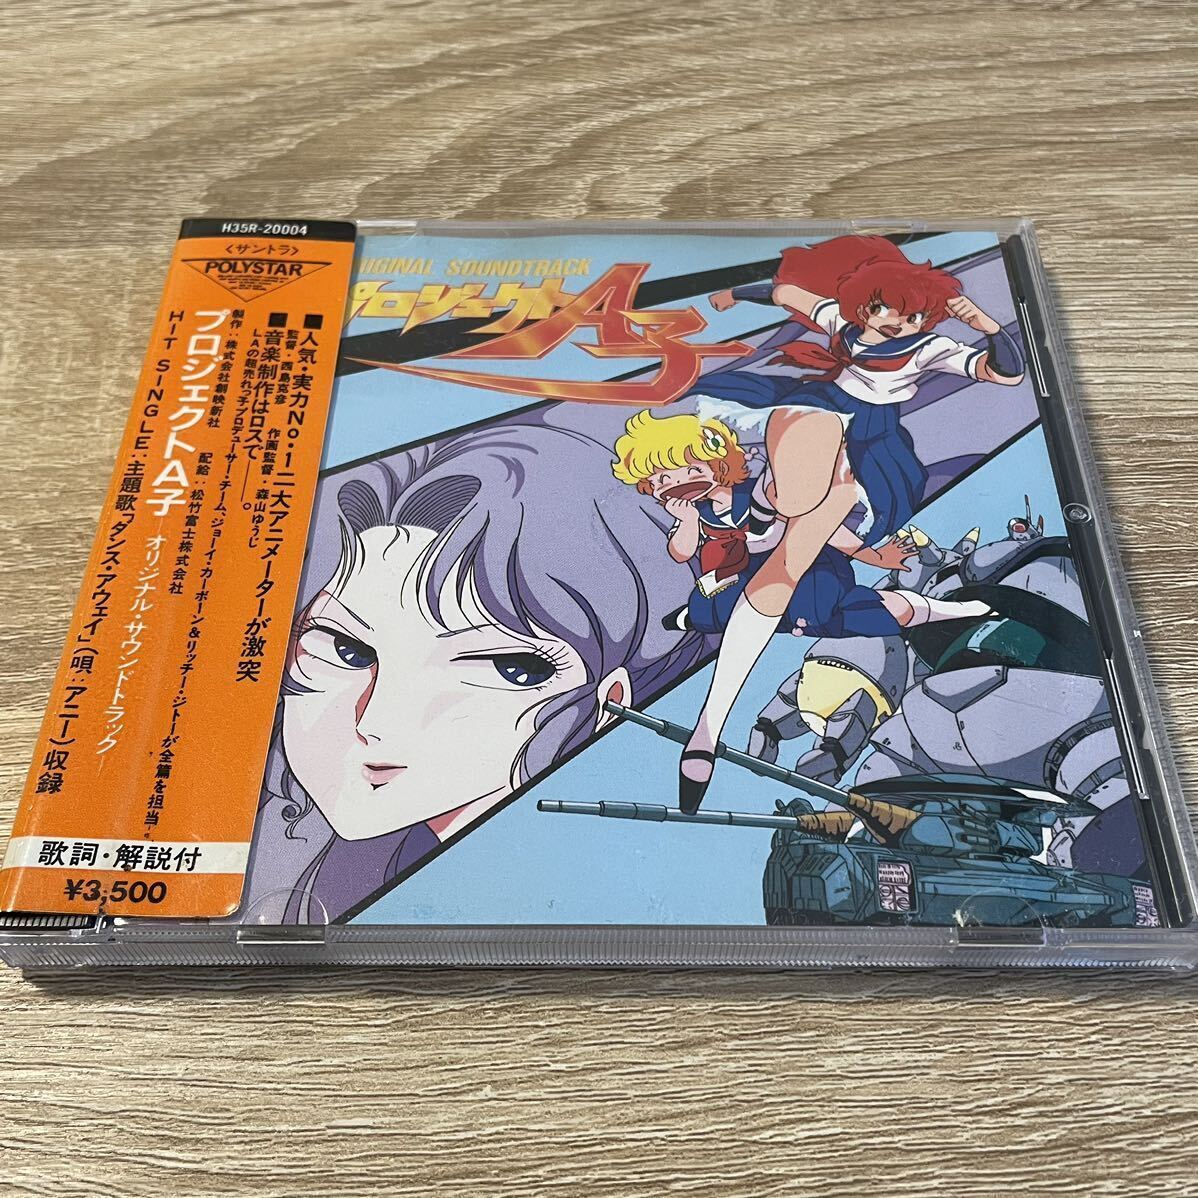 Project Ako Original Soundtrack Anime Used Cd